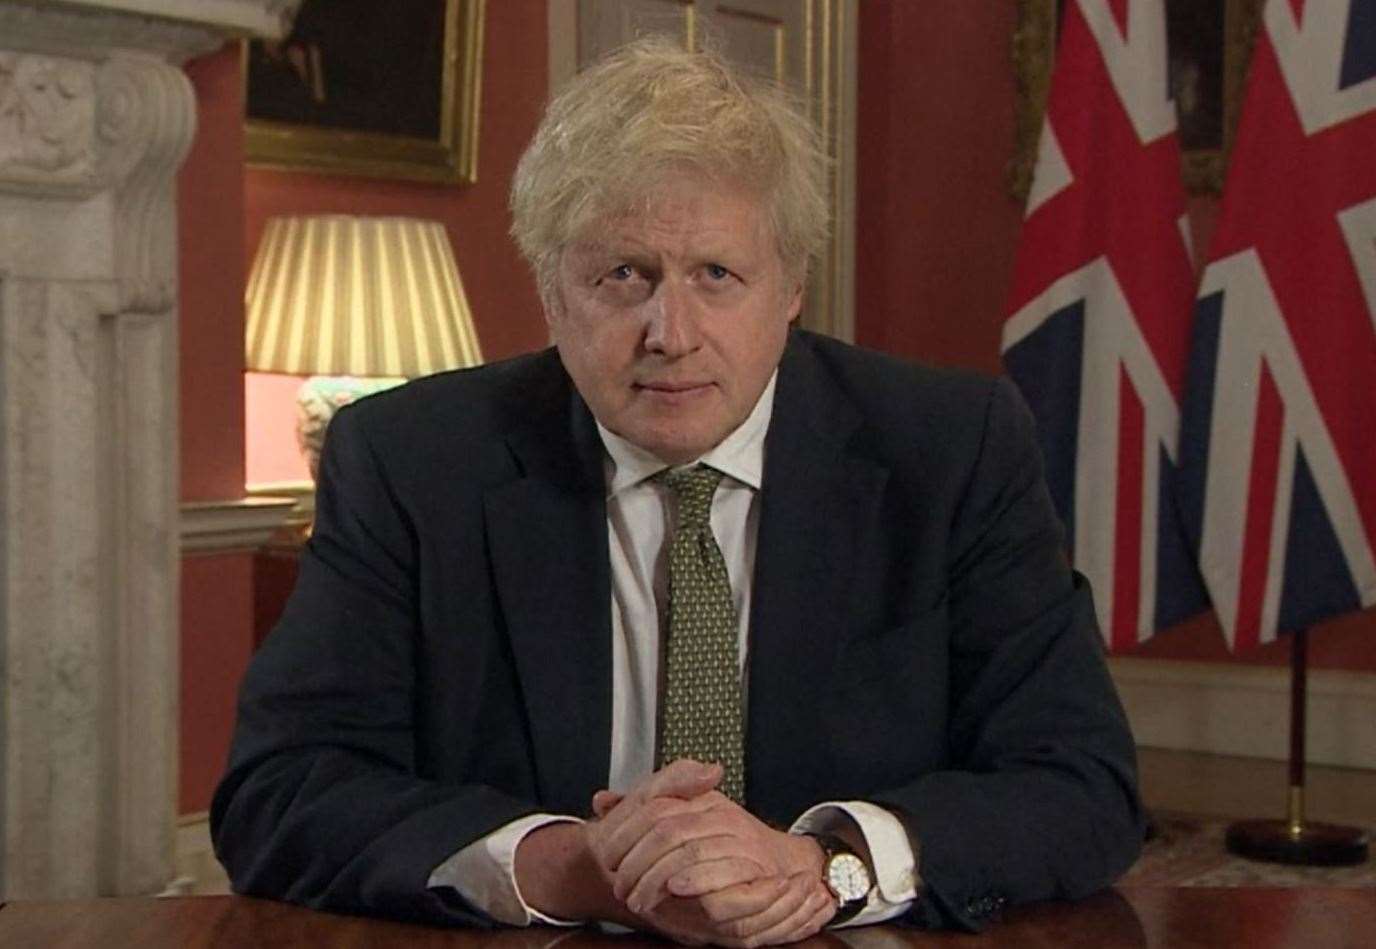 Prime Minister Boris Johnson has announced another national lockdown